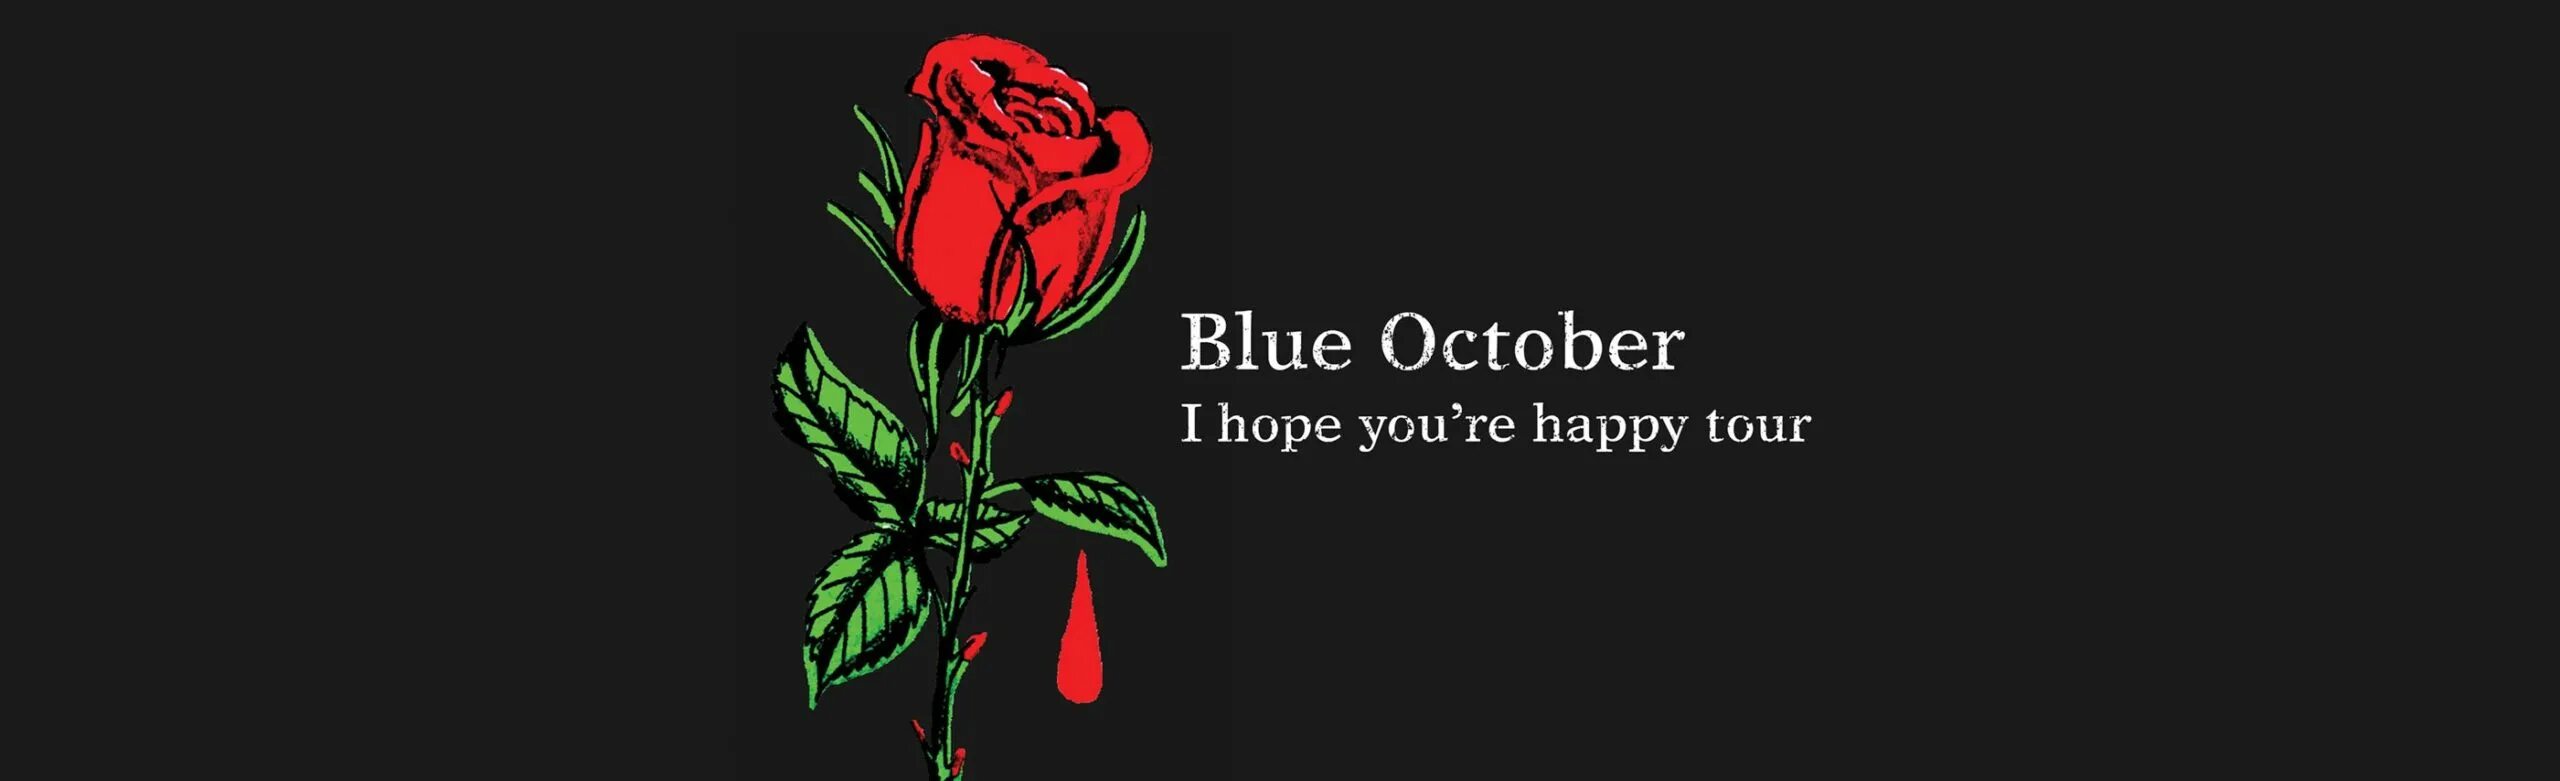 I hope you are happy. Группа Blue October. Blue October логотип. Группа logo Blue October. Blue October обложки.